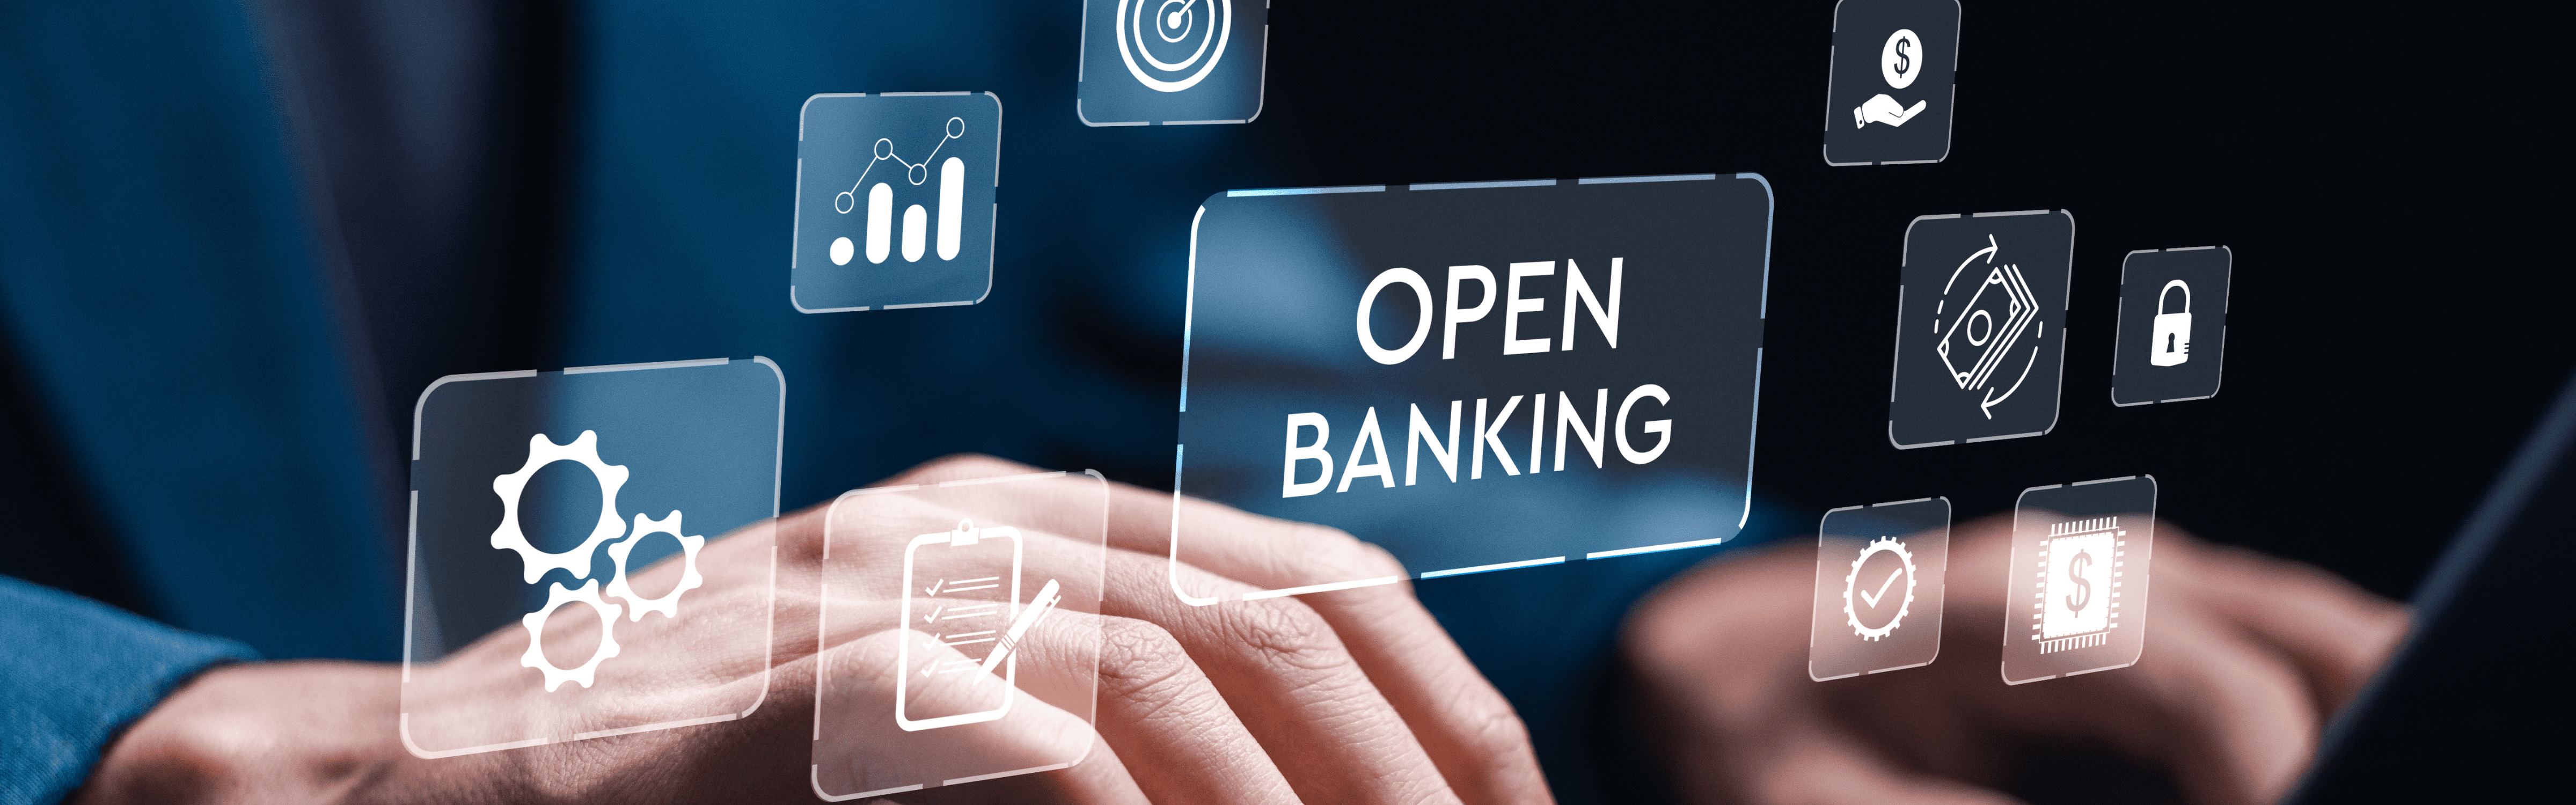 Open Banking header